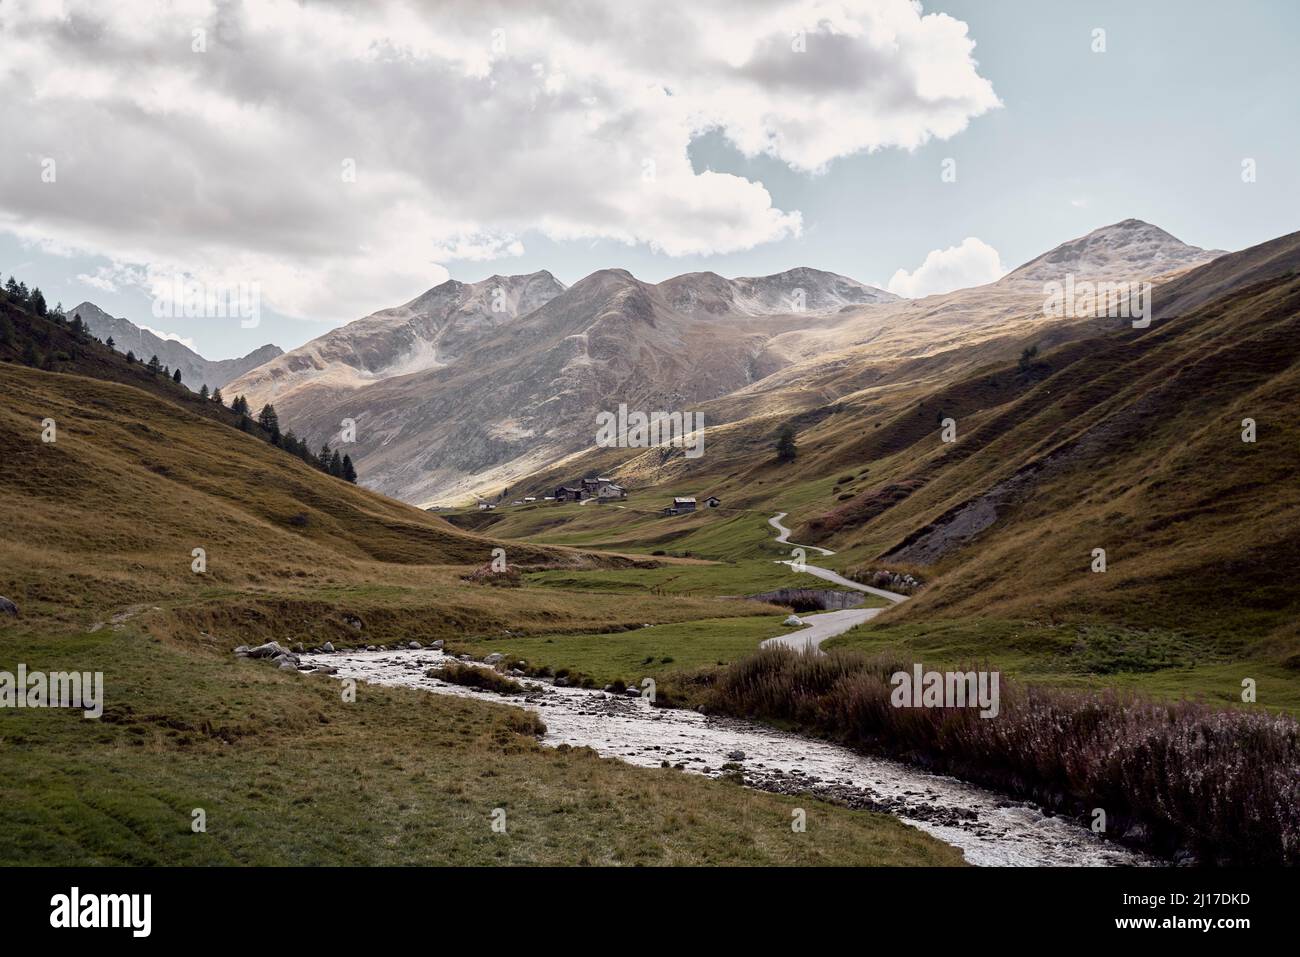 River flowing in stream amidst mountains, Foscagno Pass, Valtellina, Bormio, Italy Stock Photo